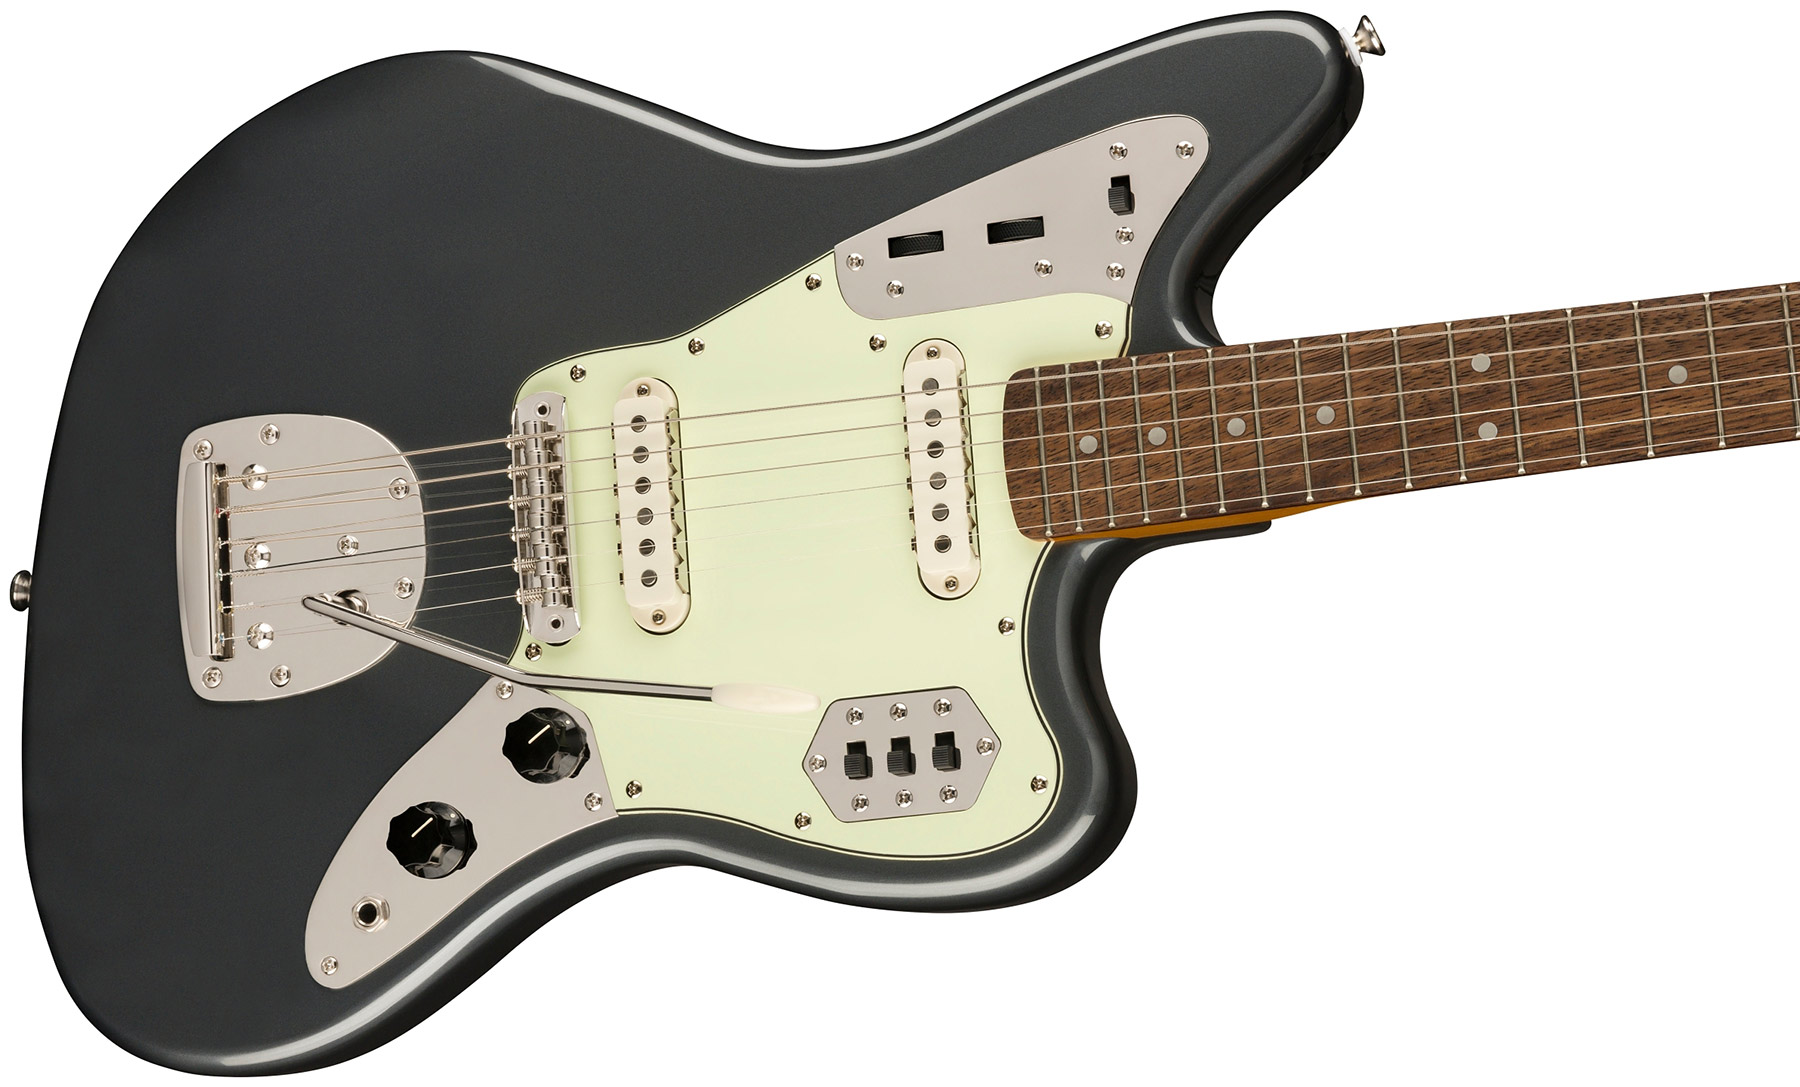 Squier Jaguar 60s Classic Vibe Fsr Ltd 2s Trem Lau - Charcoal Frost Metallic - Guitarra electrica retro rock - Variation 2